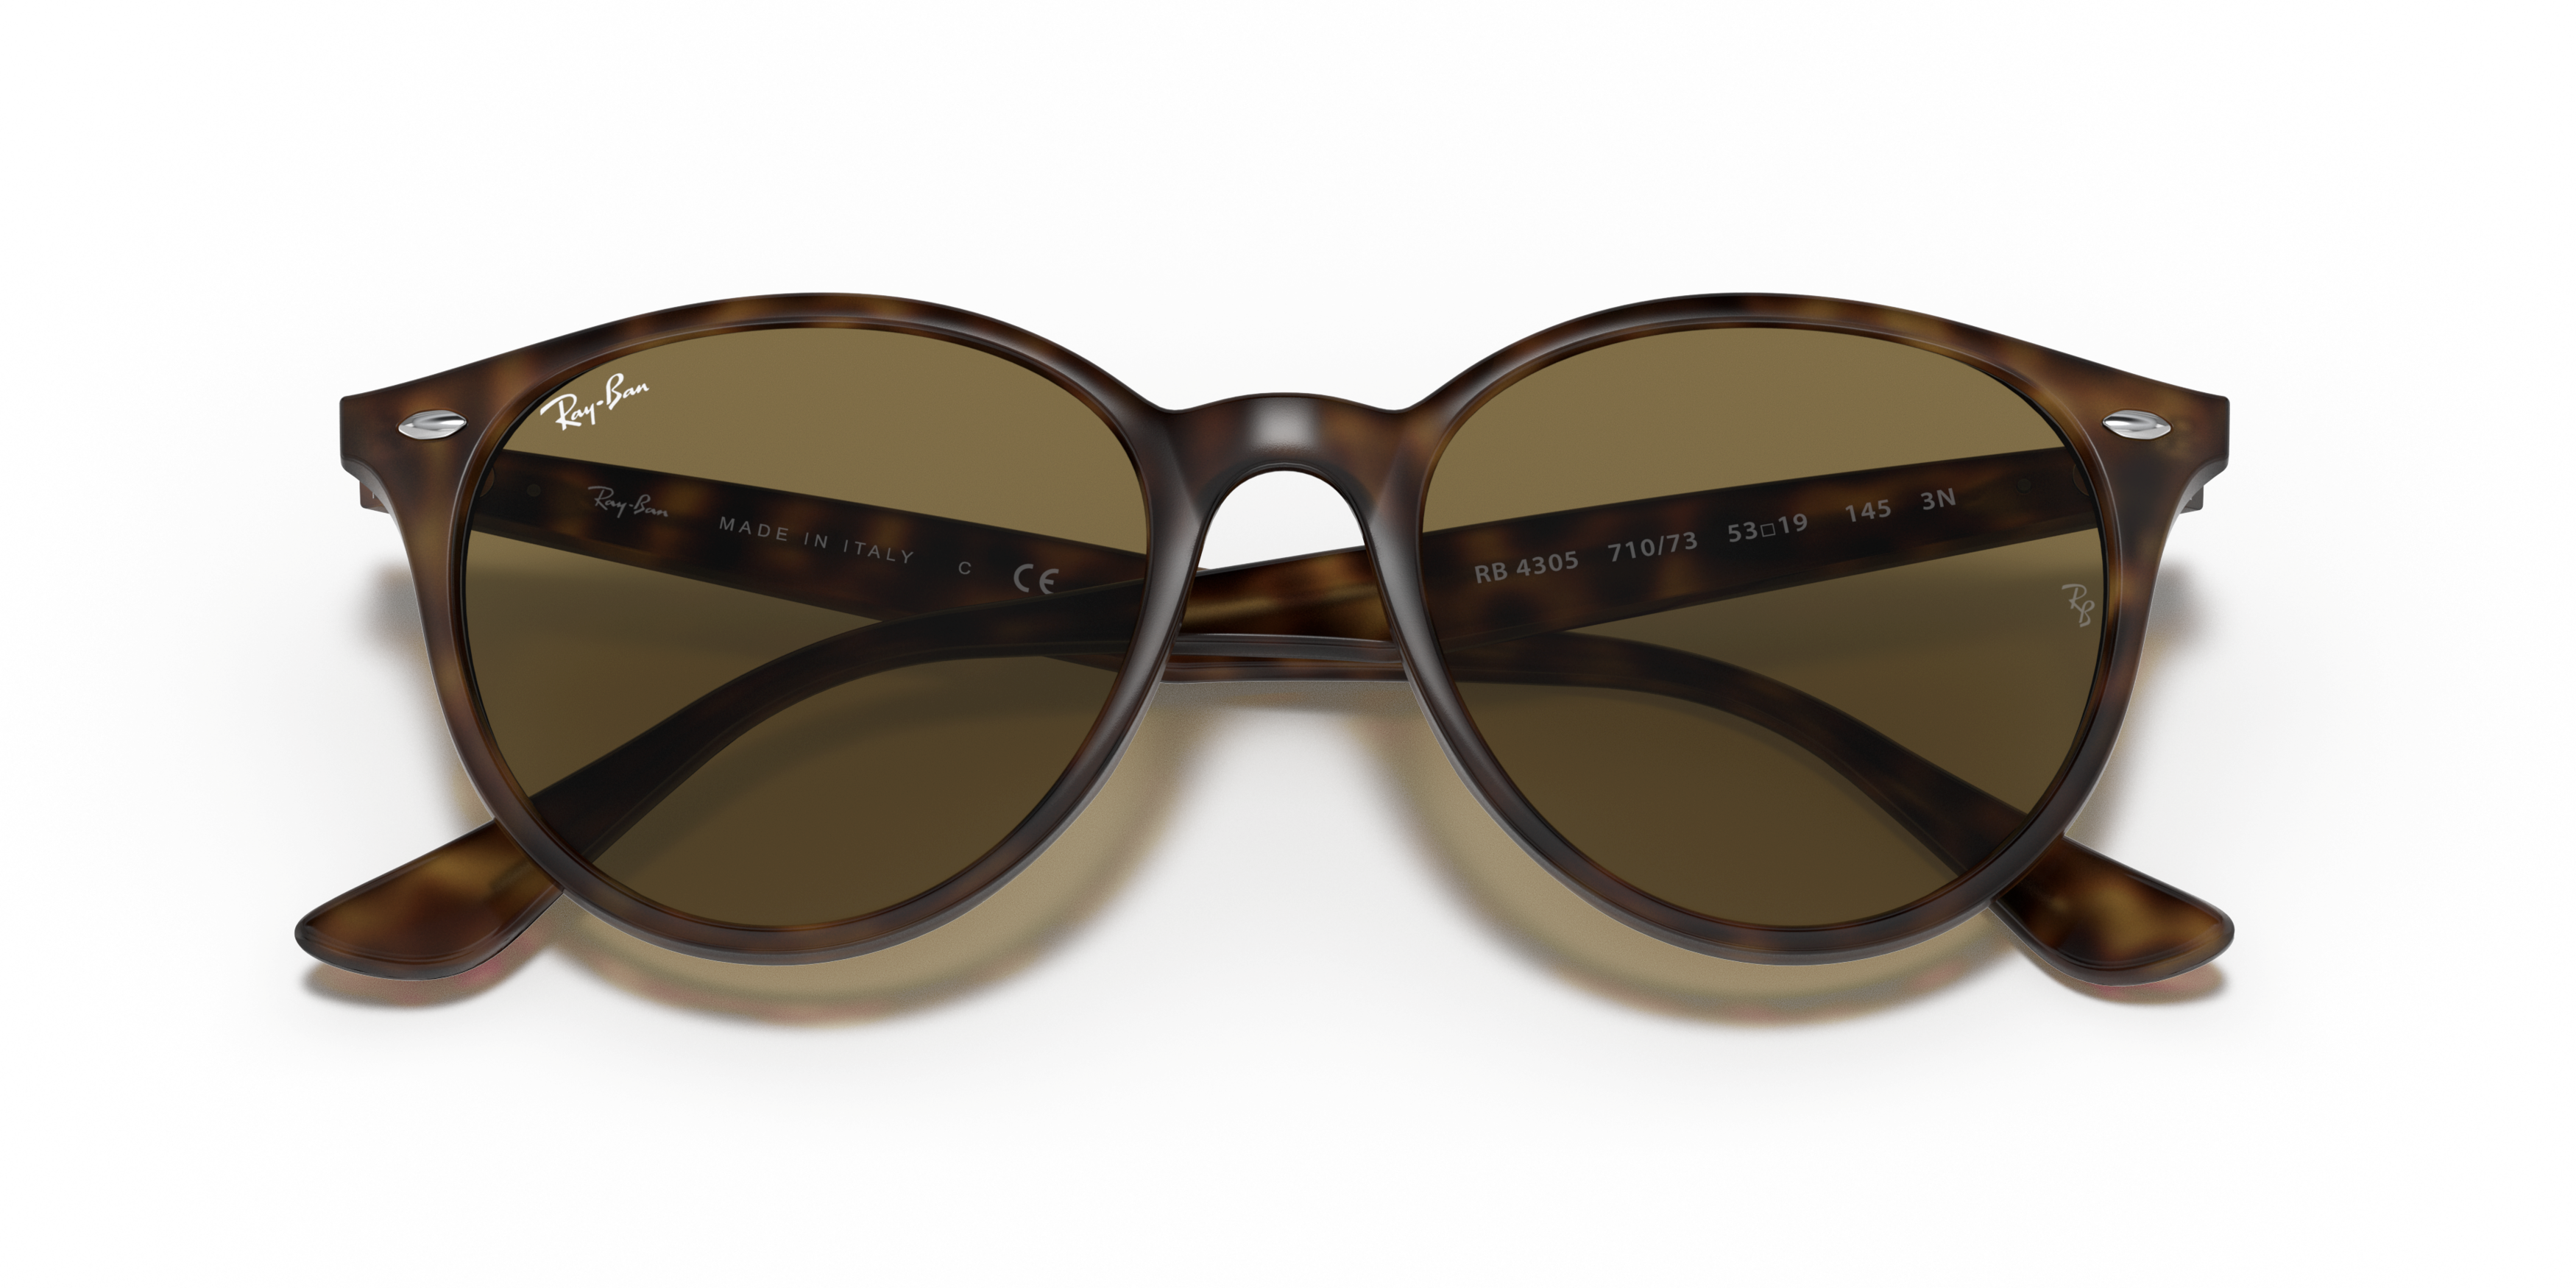 Folded Ray-Ban RB 4305 (710/73) Sunglasses Brown / Tortoise Shell